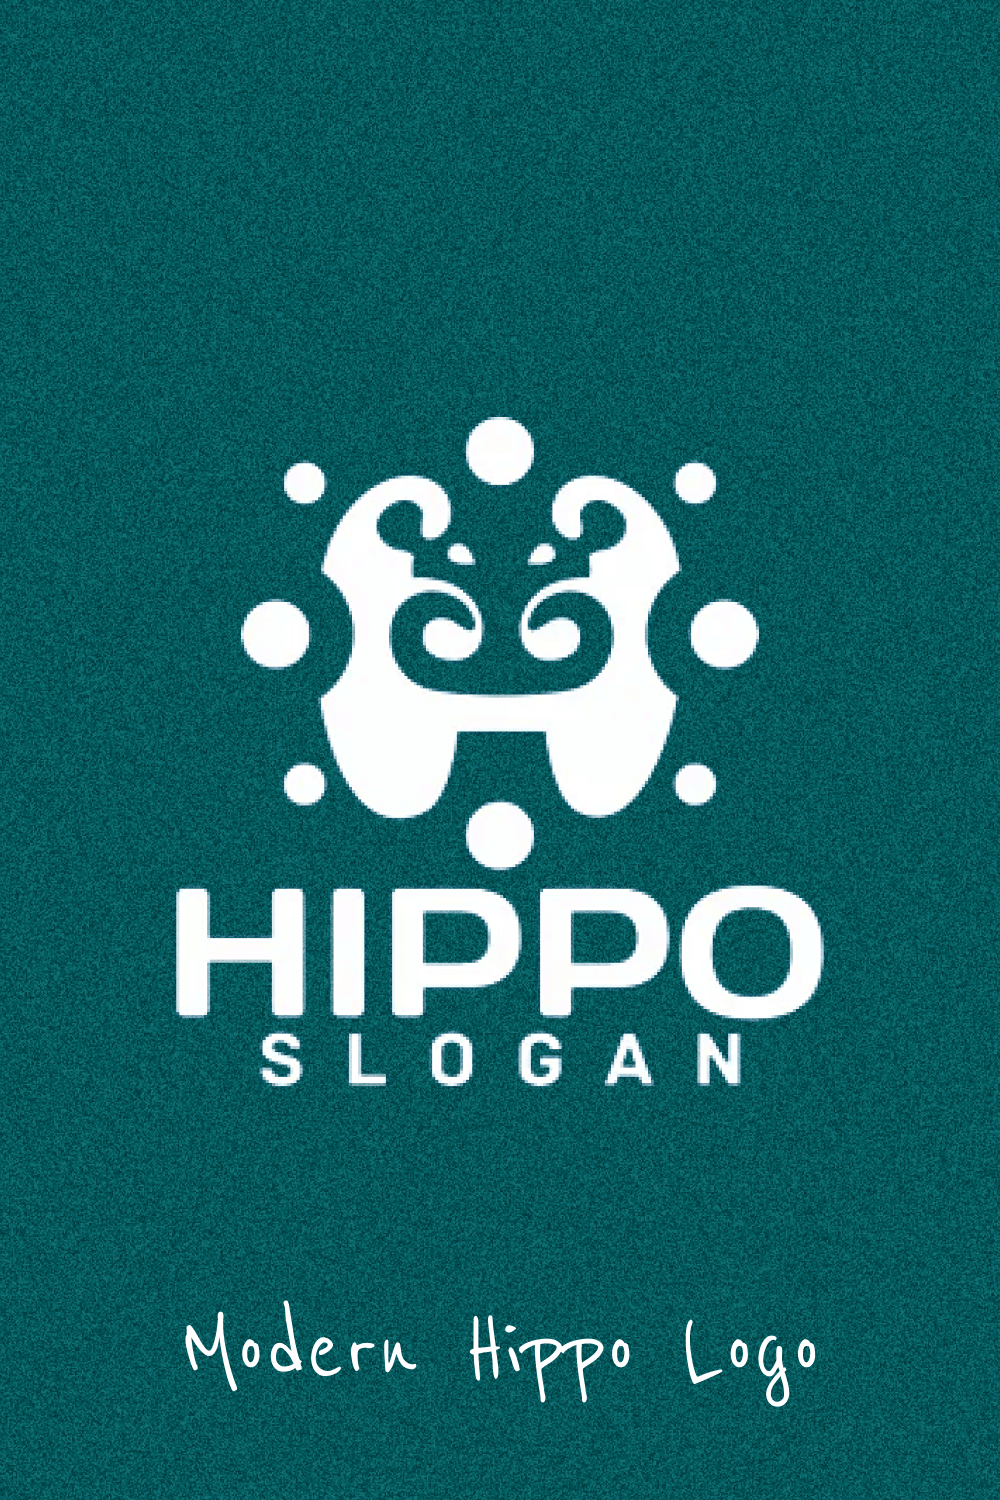 Hippo logo on blue background.